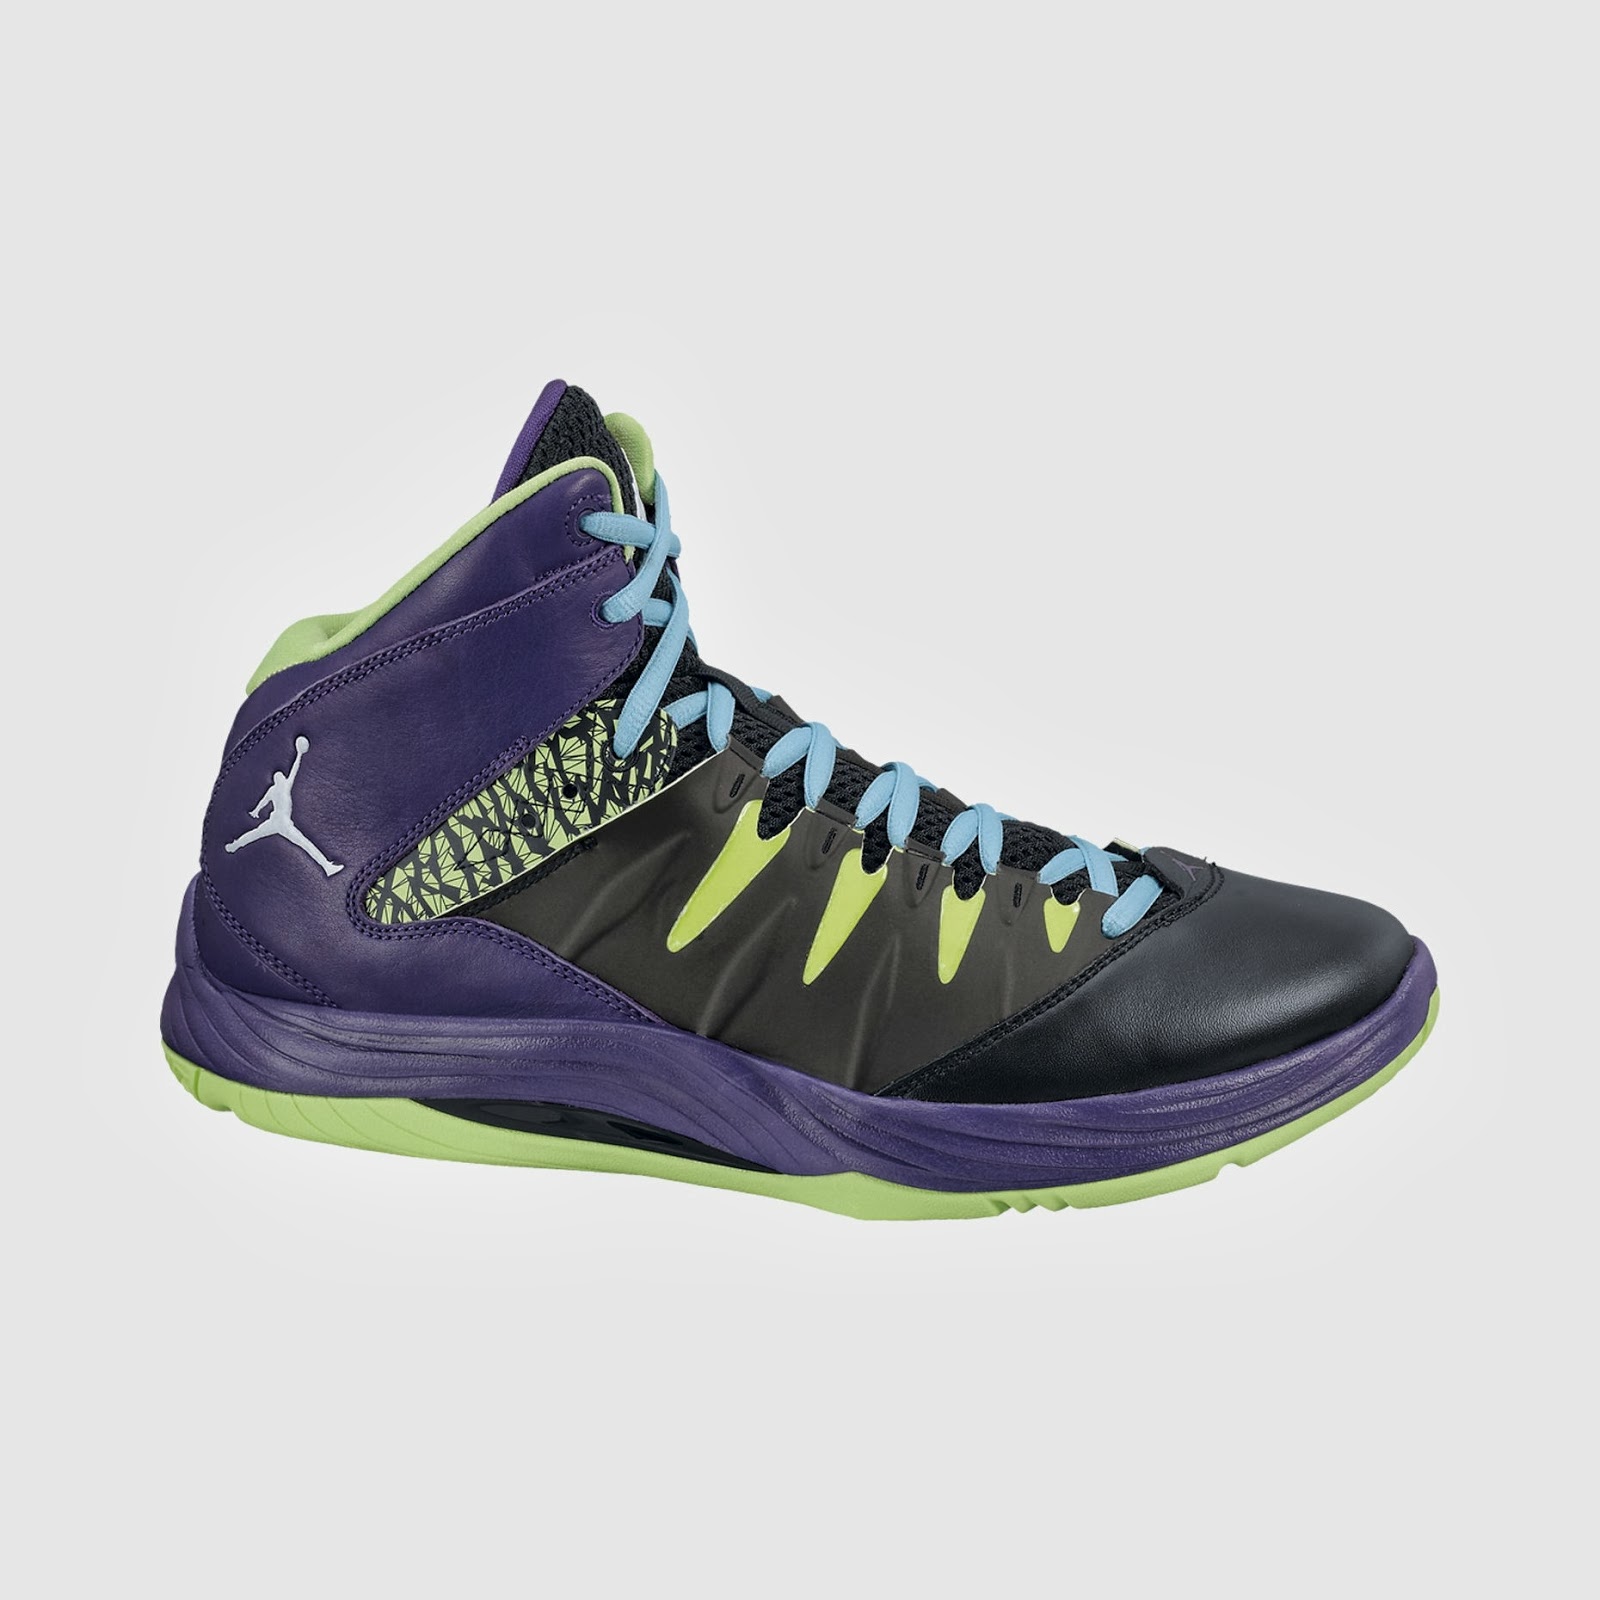  Nike  Air Jordan Retro Basketball Shoes  and Sandals  